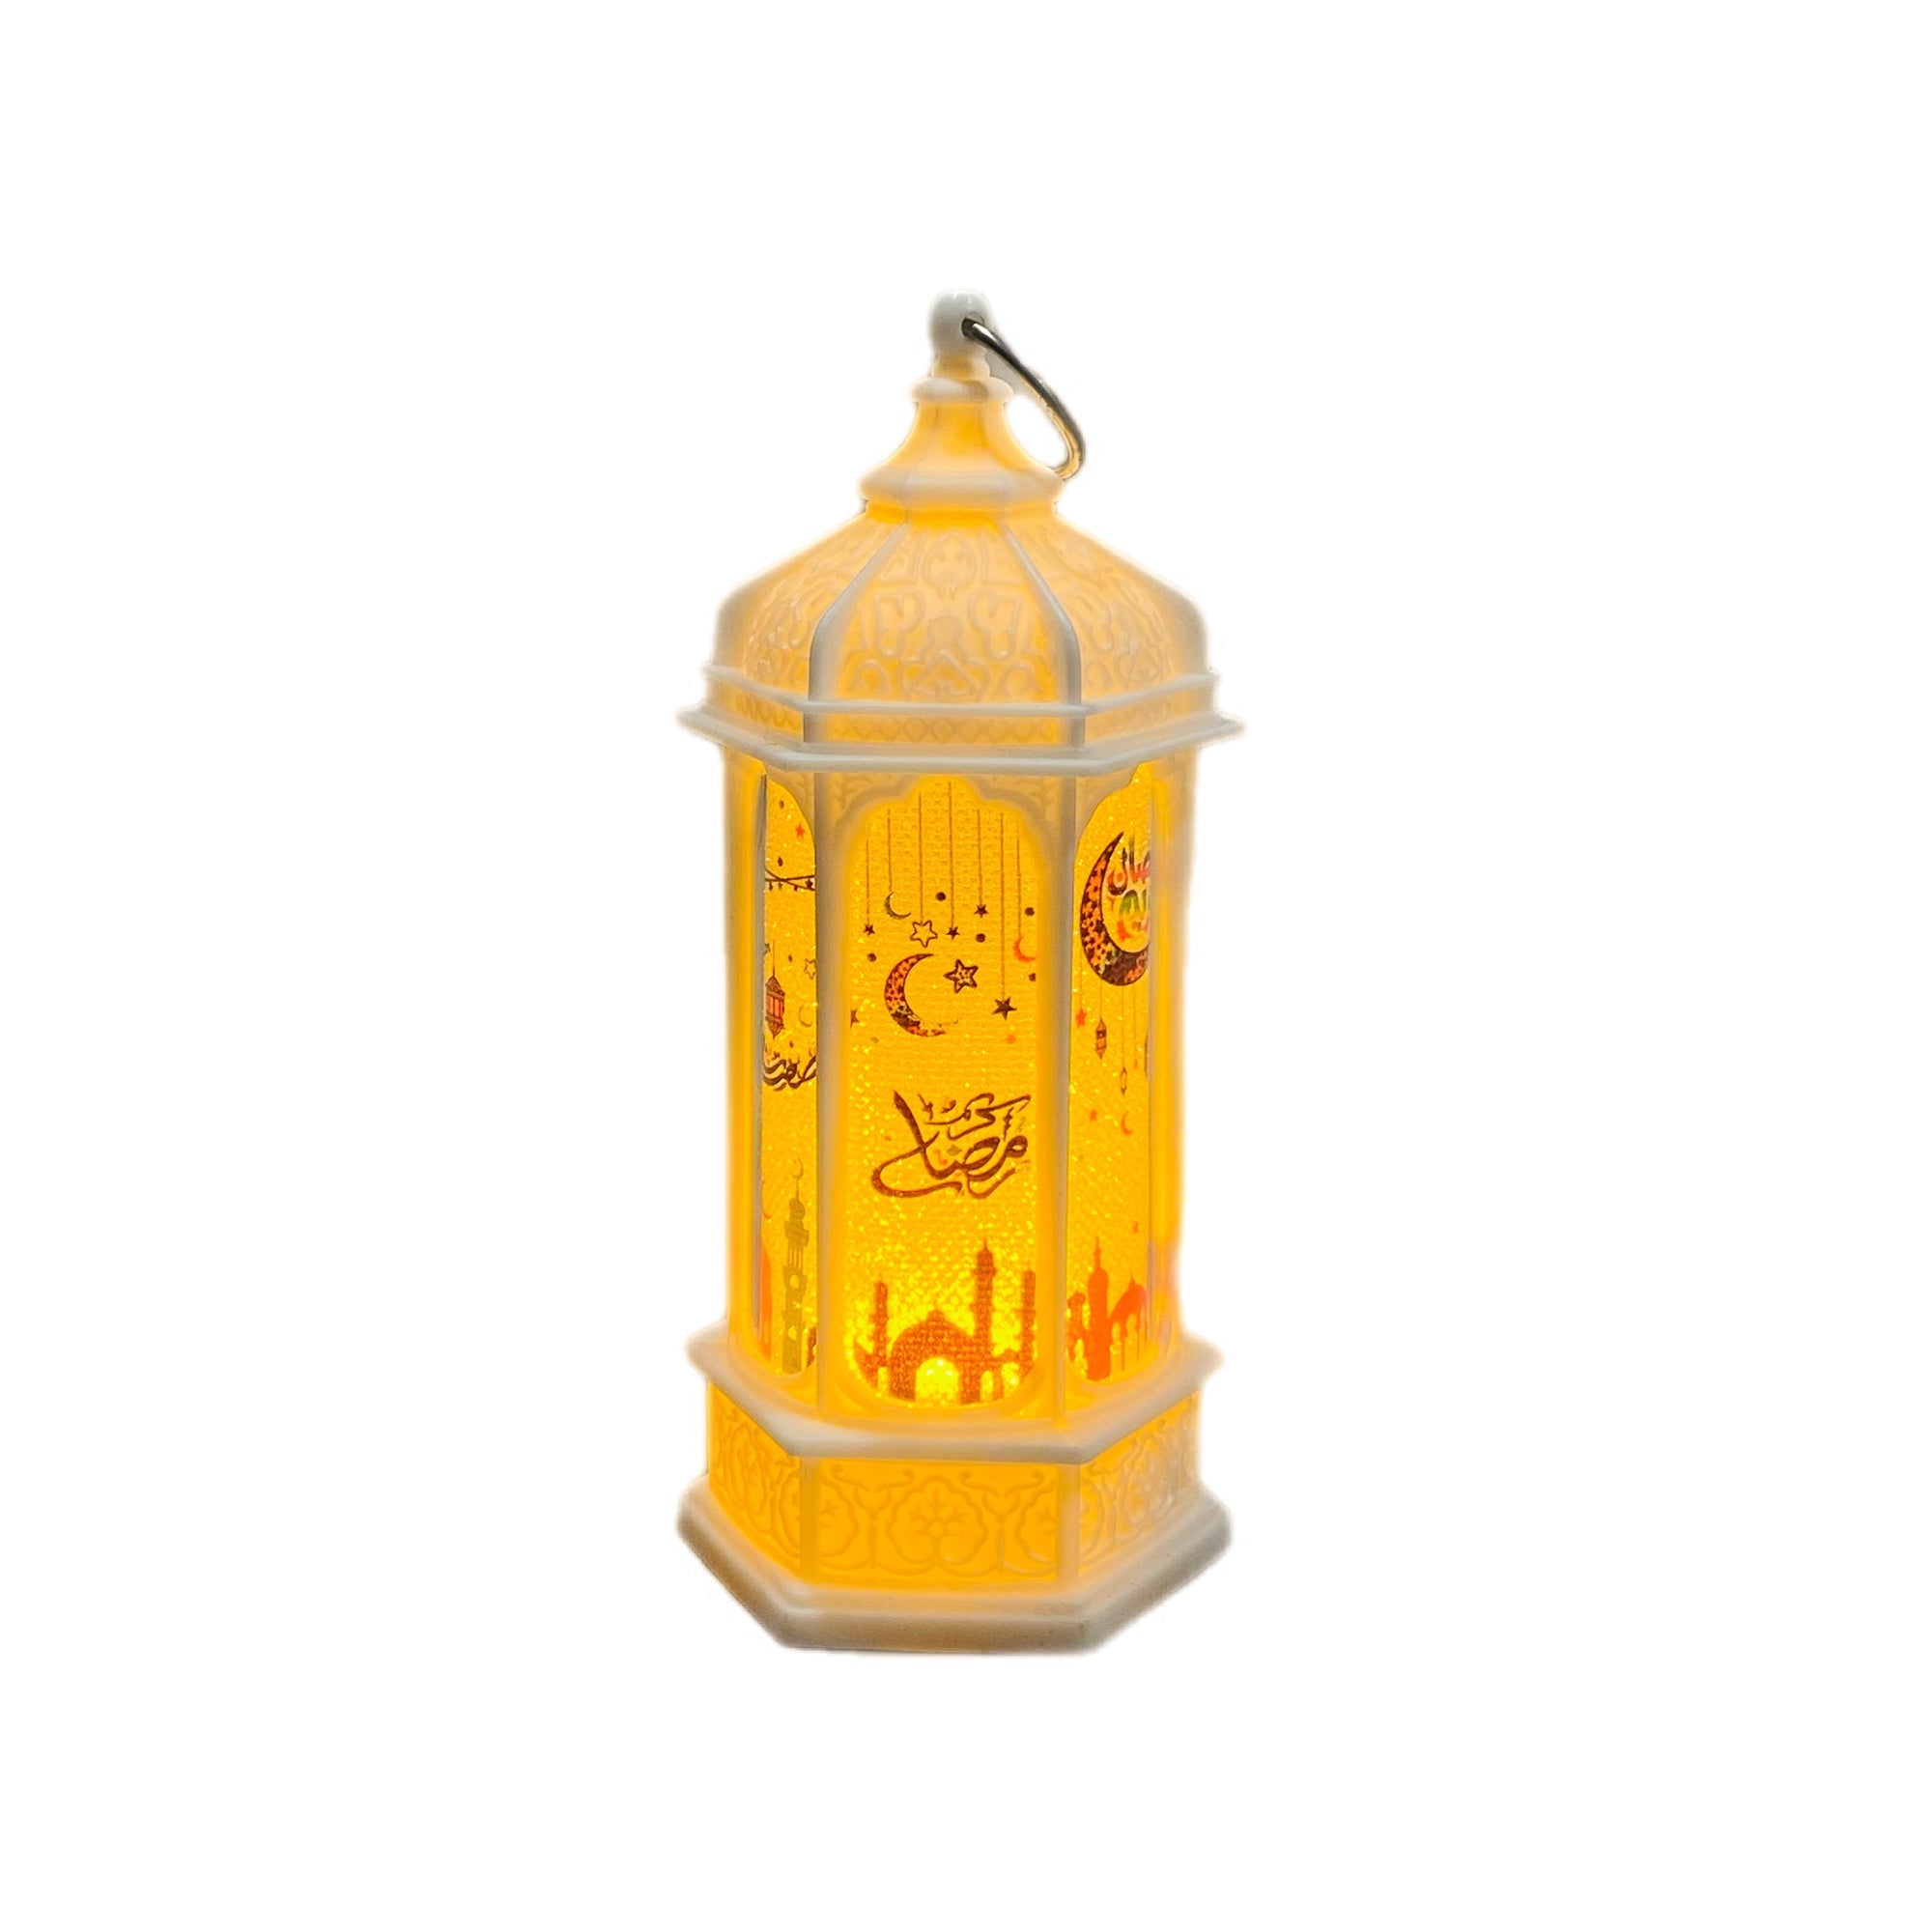 Ramadan Mini Lantern Light -Rmd77- فانوس صغير ضوئي رمضان White